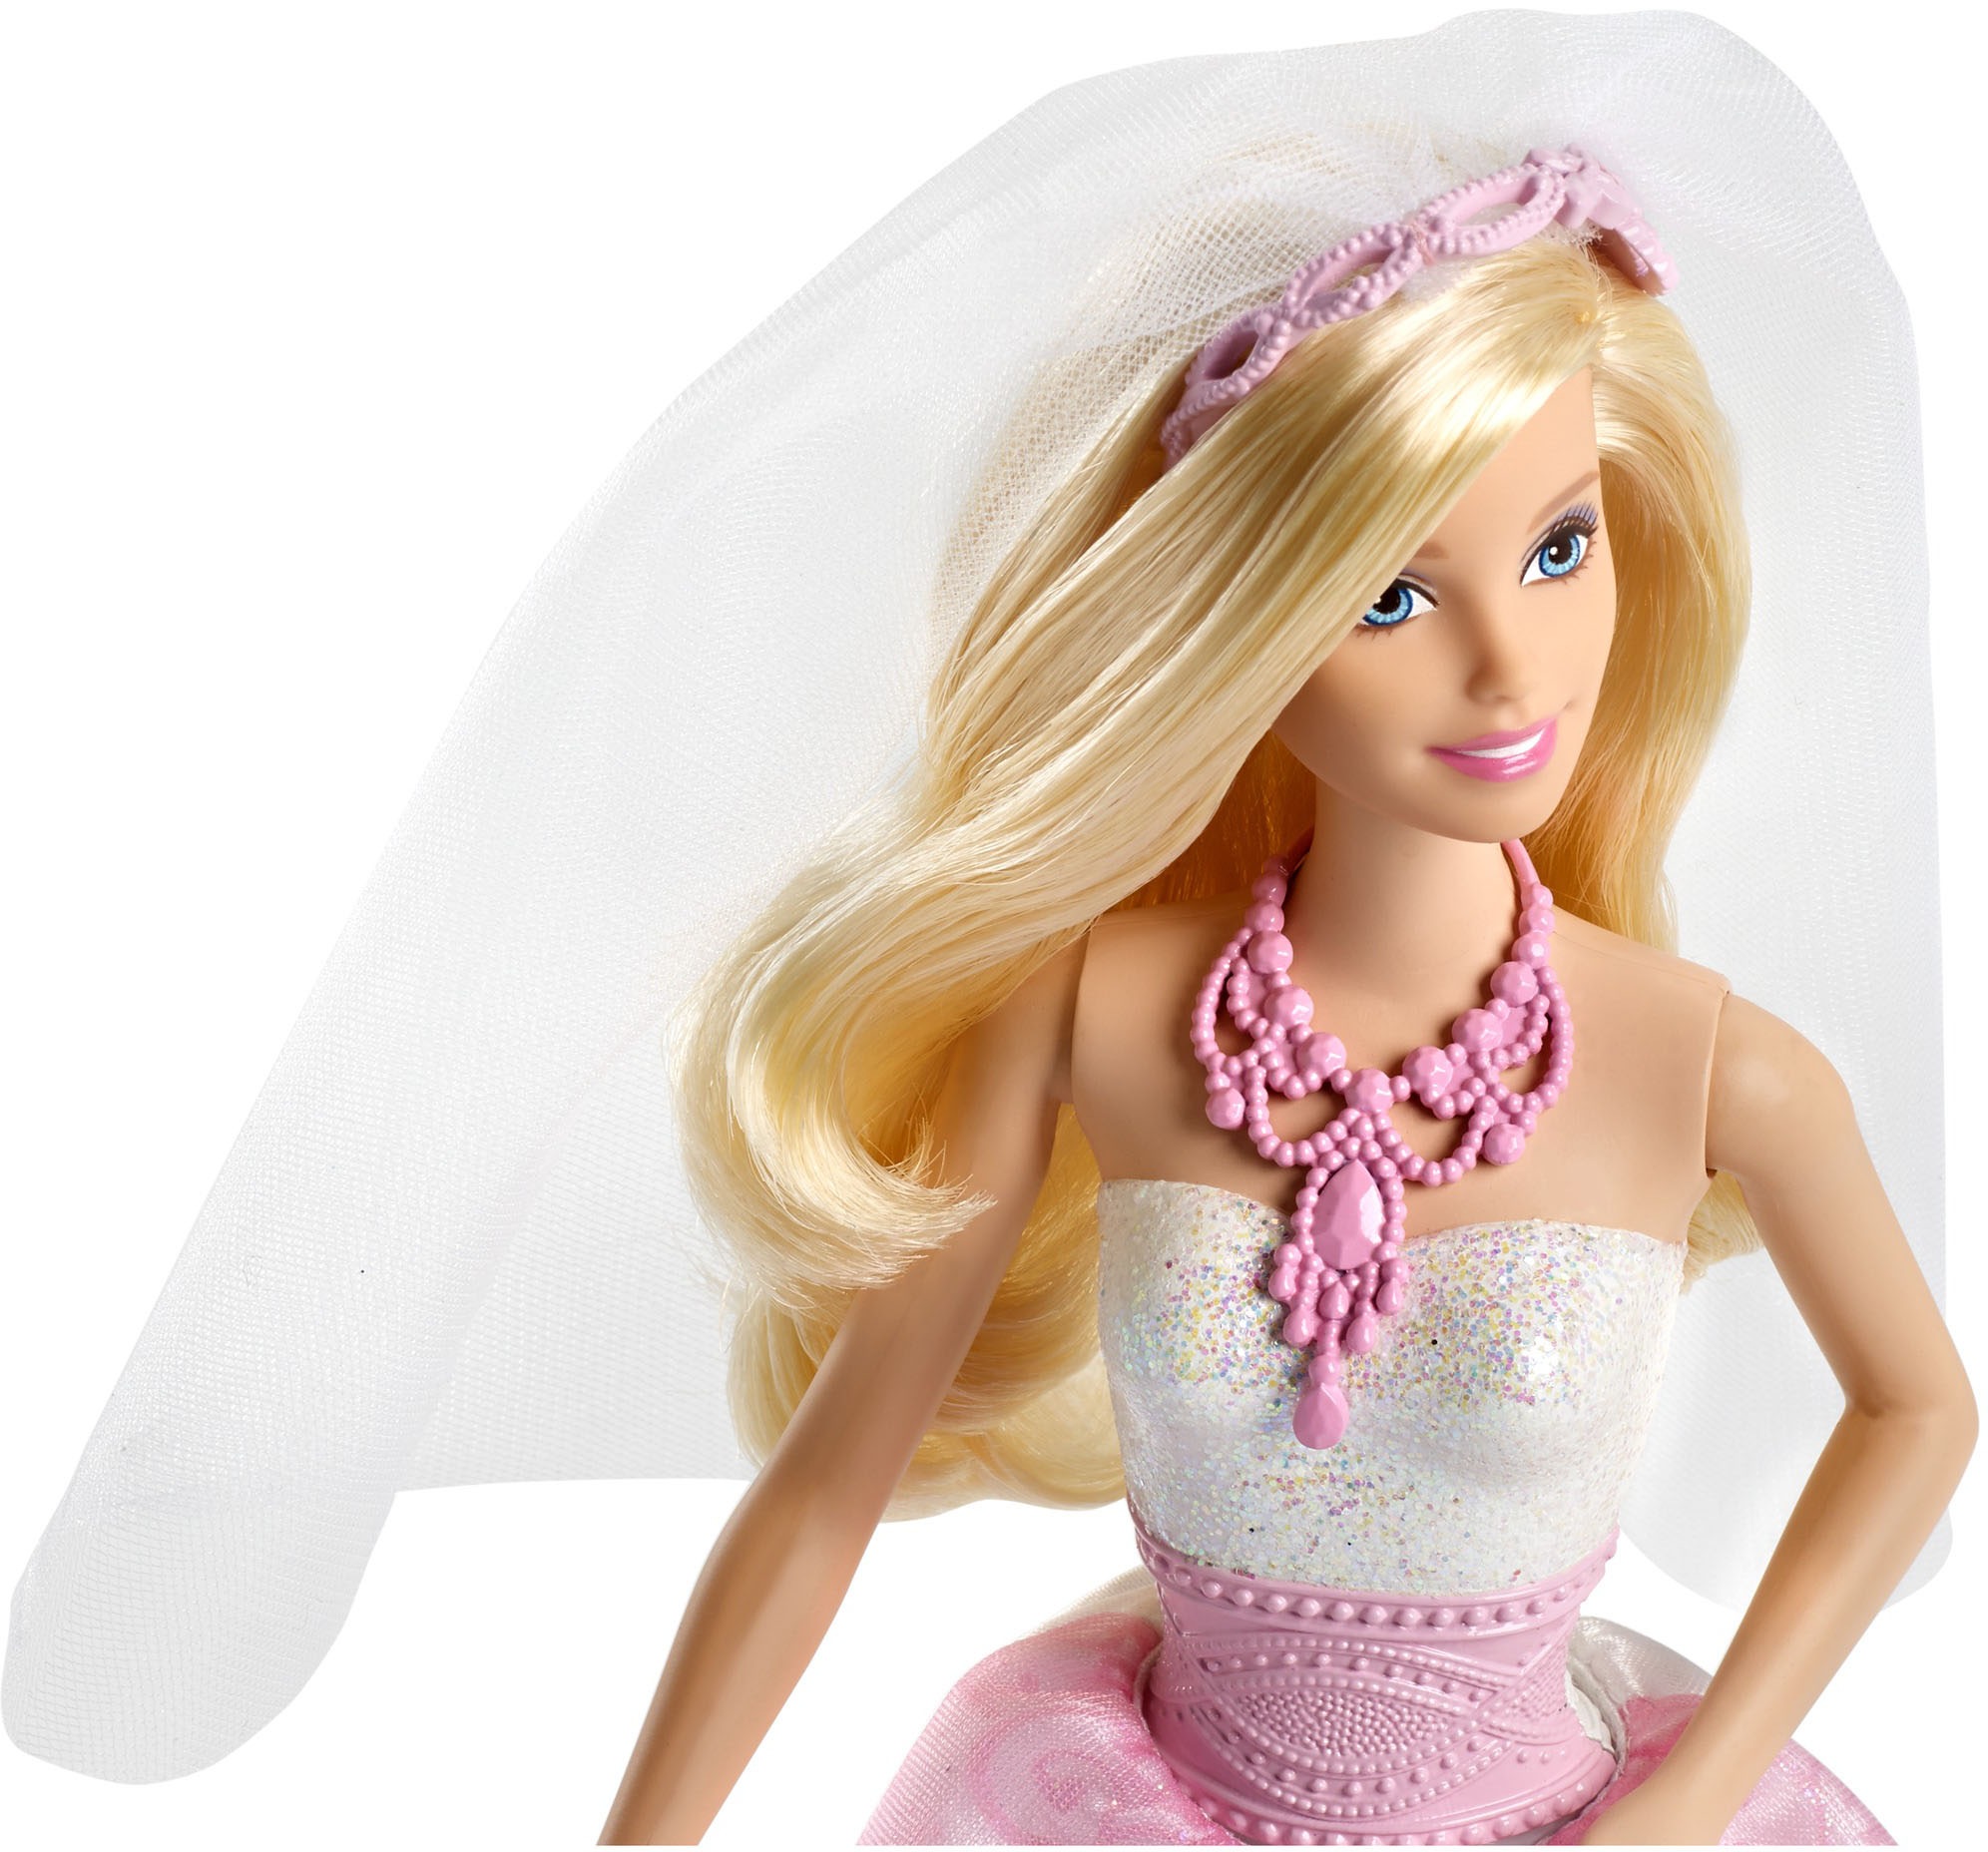 Barbie Anziehpuppe »Braut, blond«